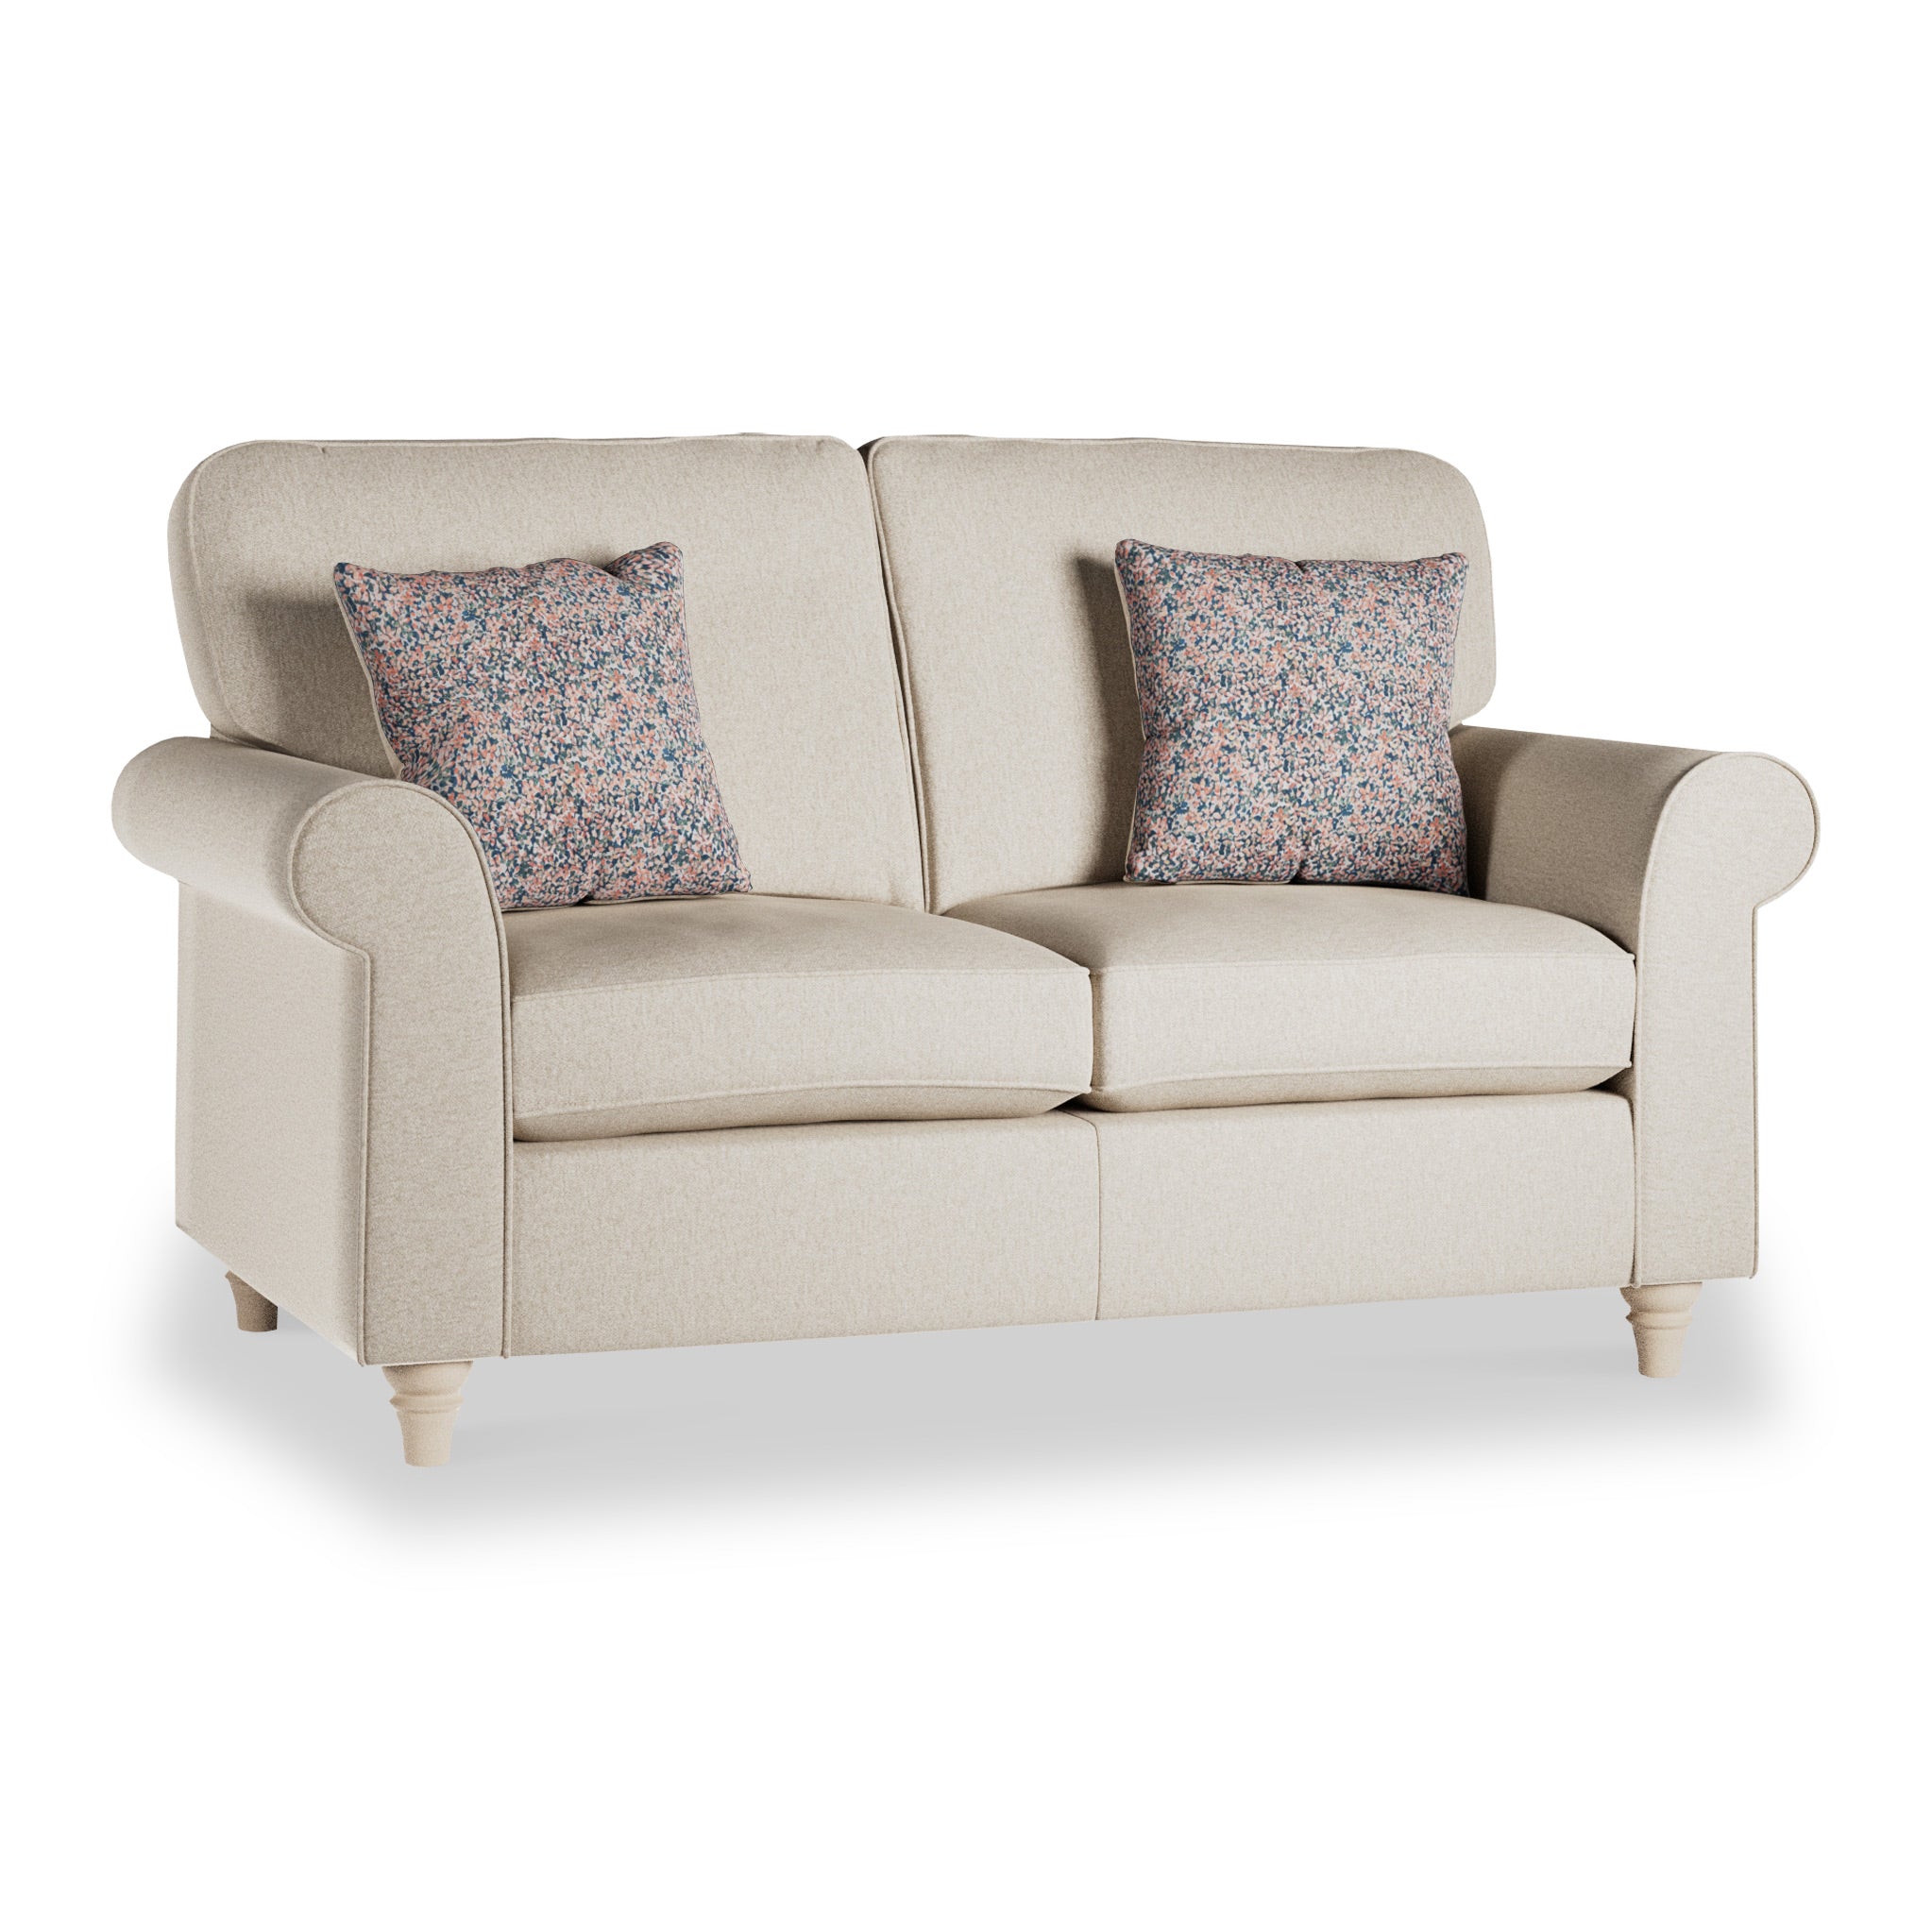 Thomas 2 Seater Sofa Comfortable Stylish Couch Roseland